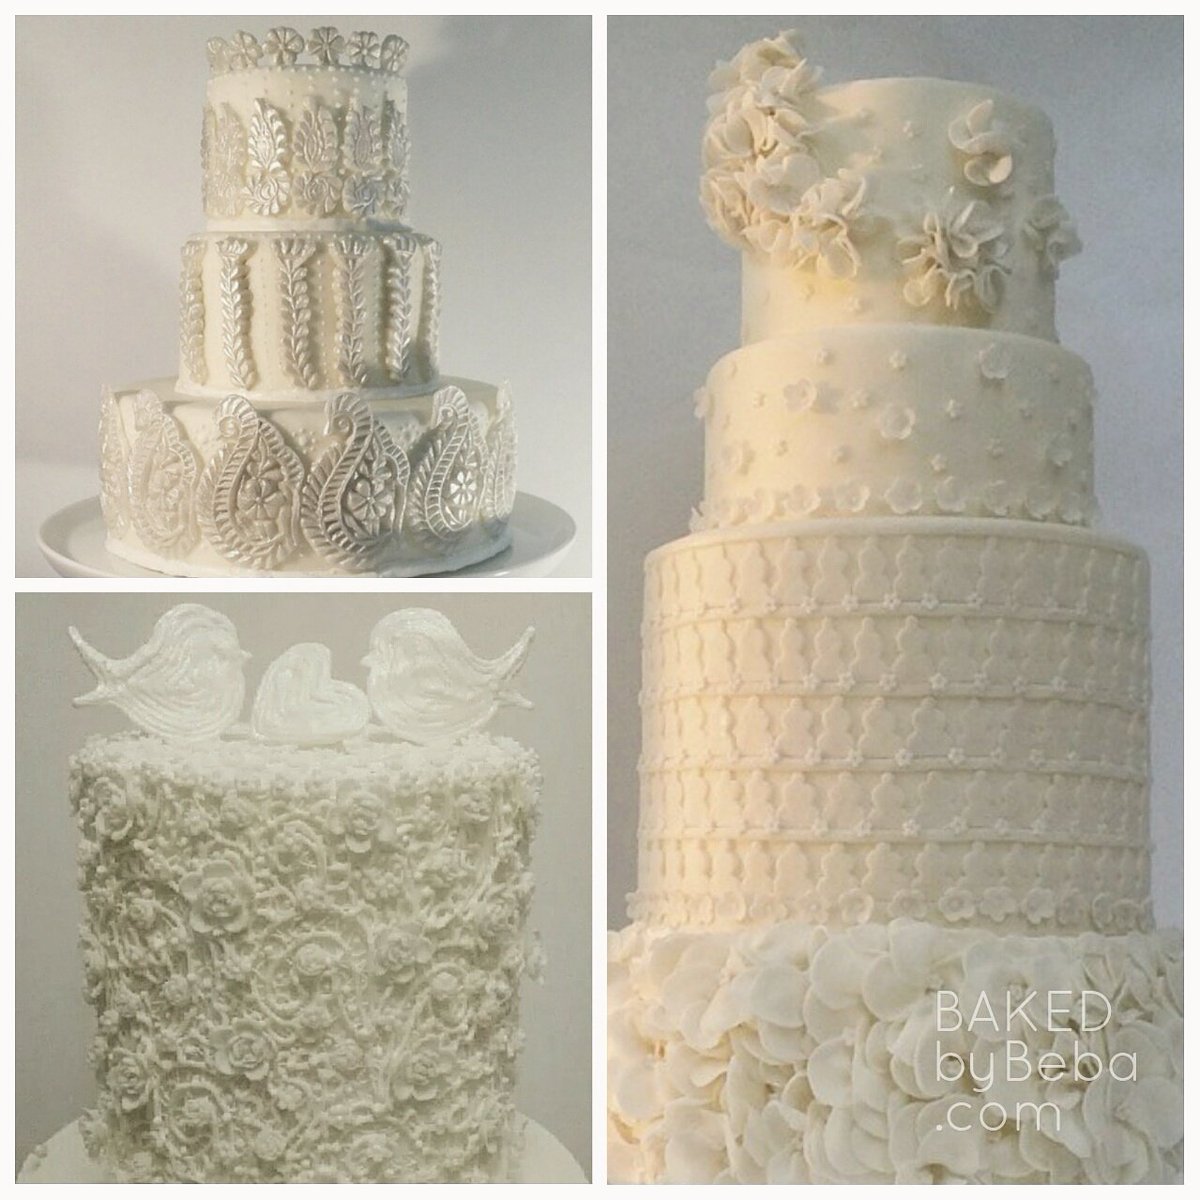 Past loves...
#weddingcakes #tieredcakes #weddings